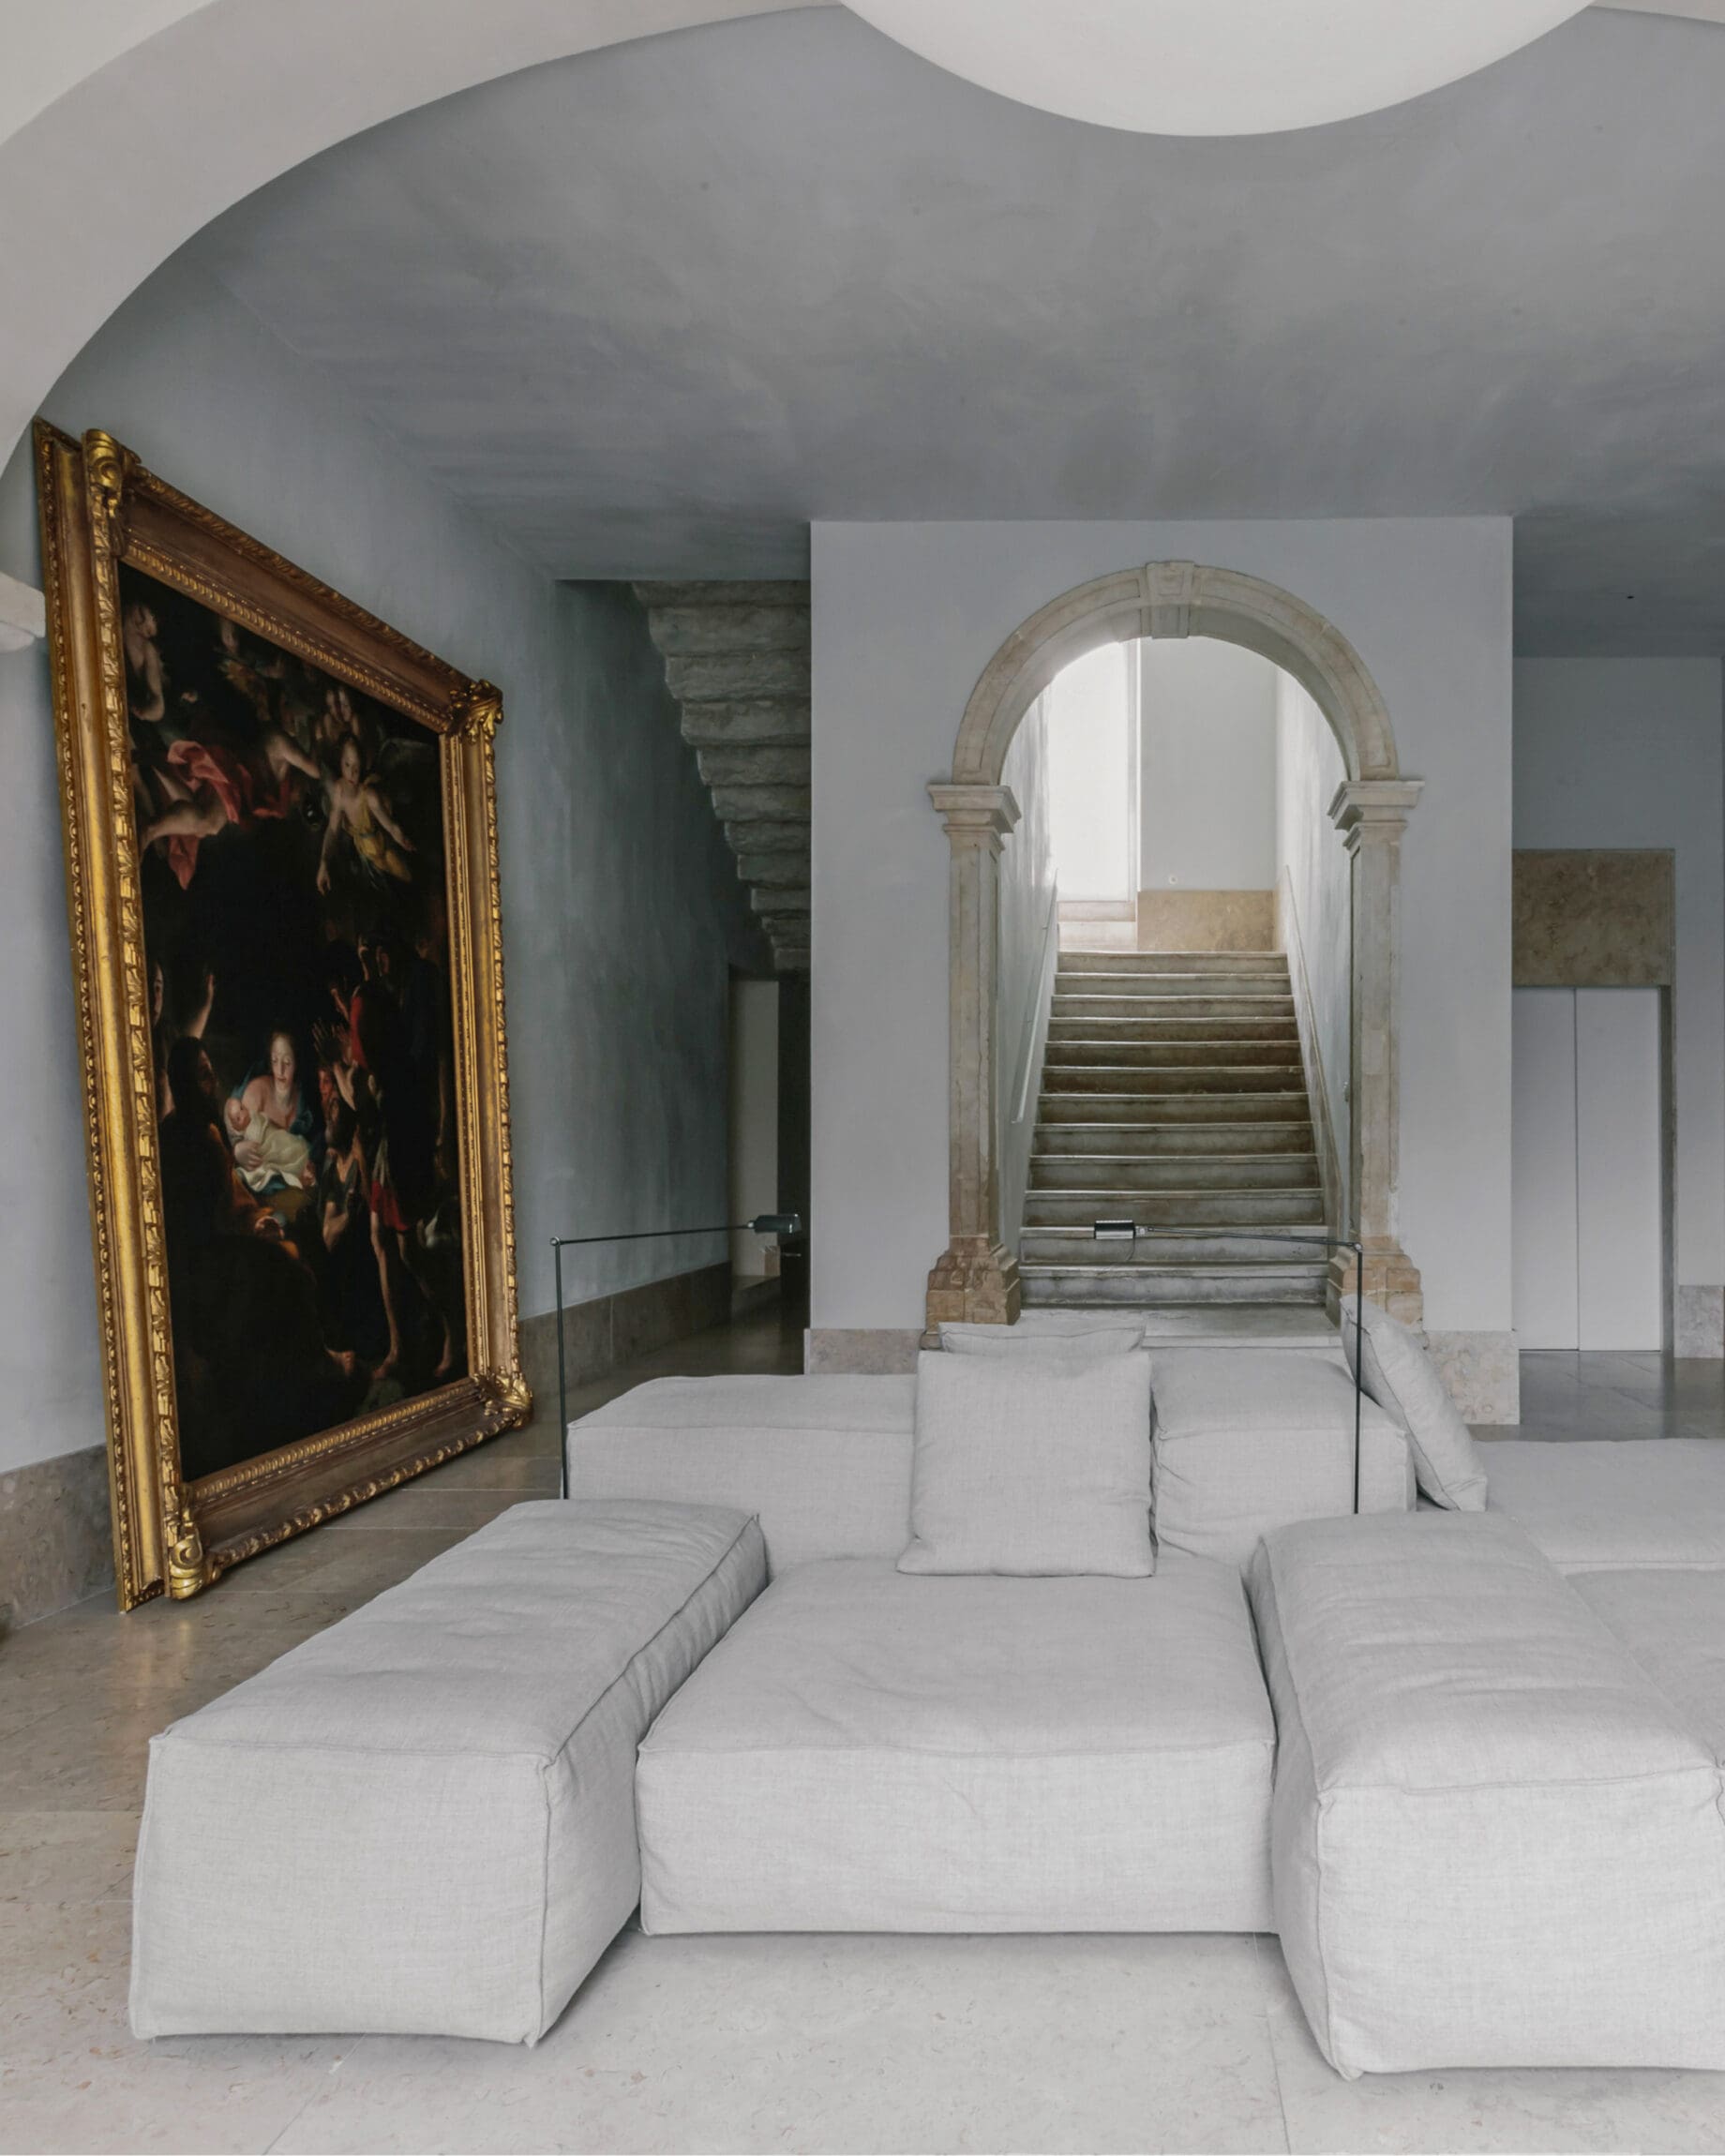 The best hotels in Lisbon | Interiors at Santa Clara 1728